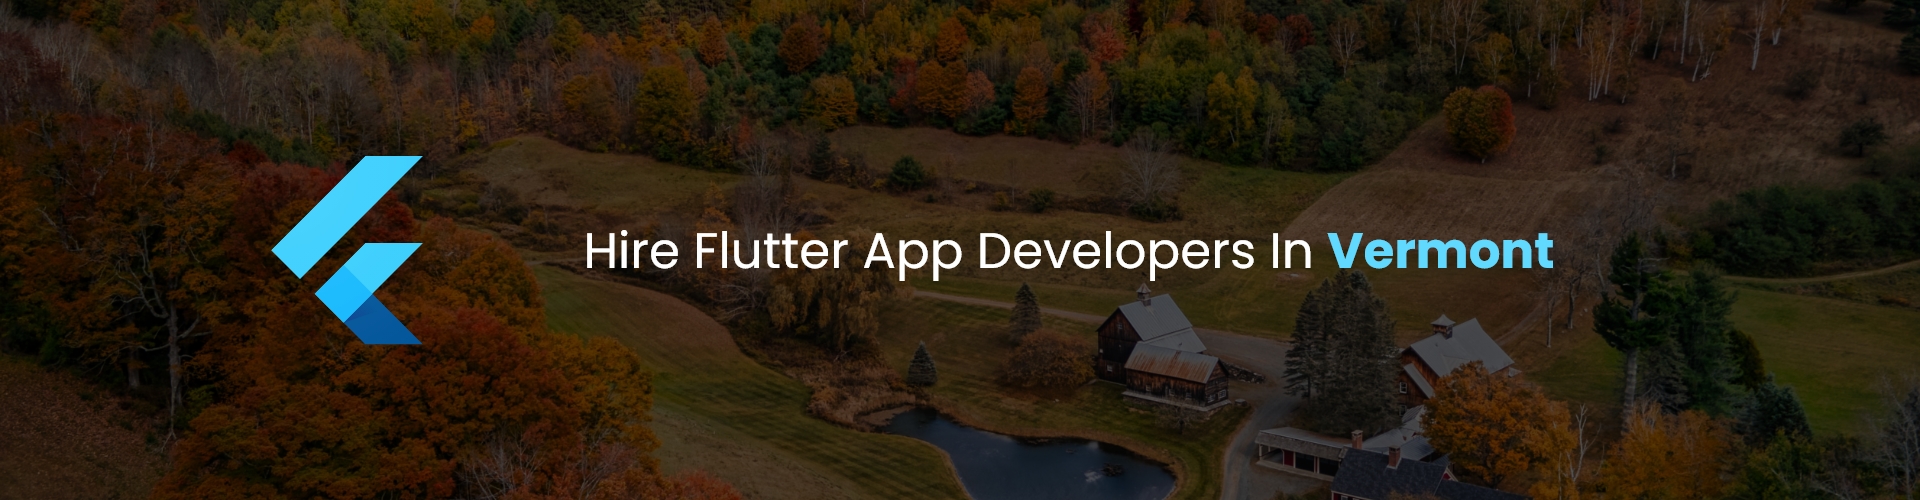 flutter app developers in vermont